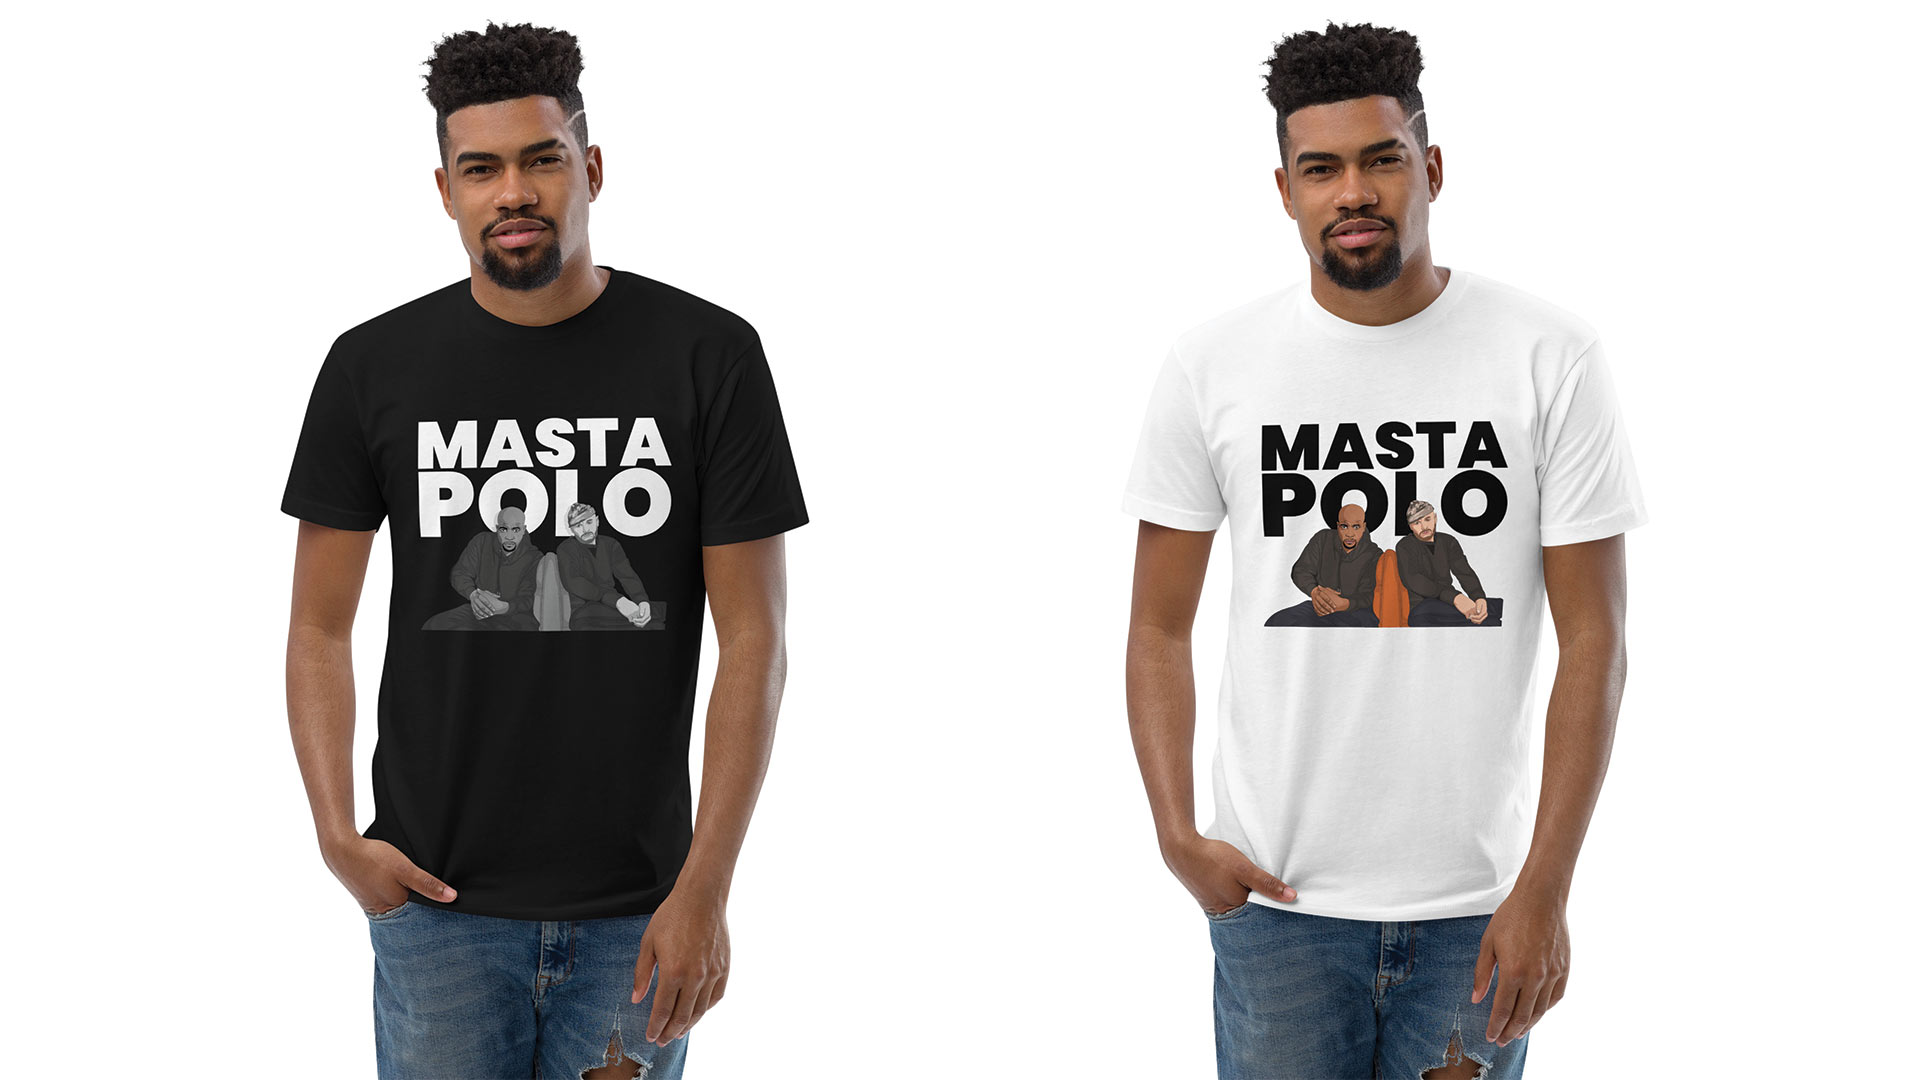 Masta Polo T-Shirt Design